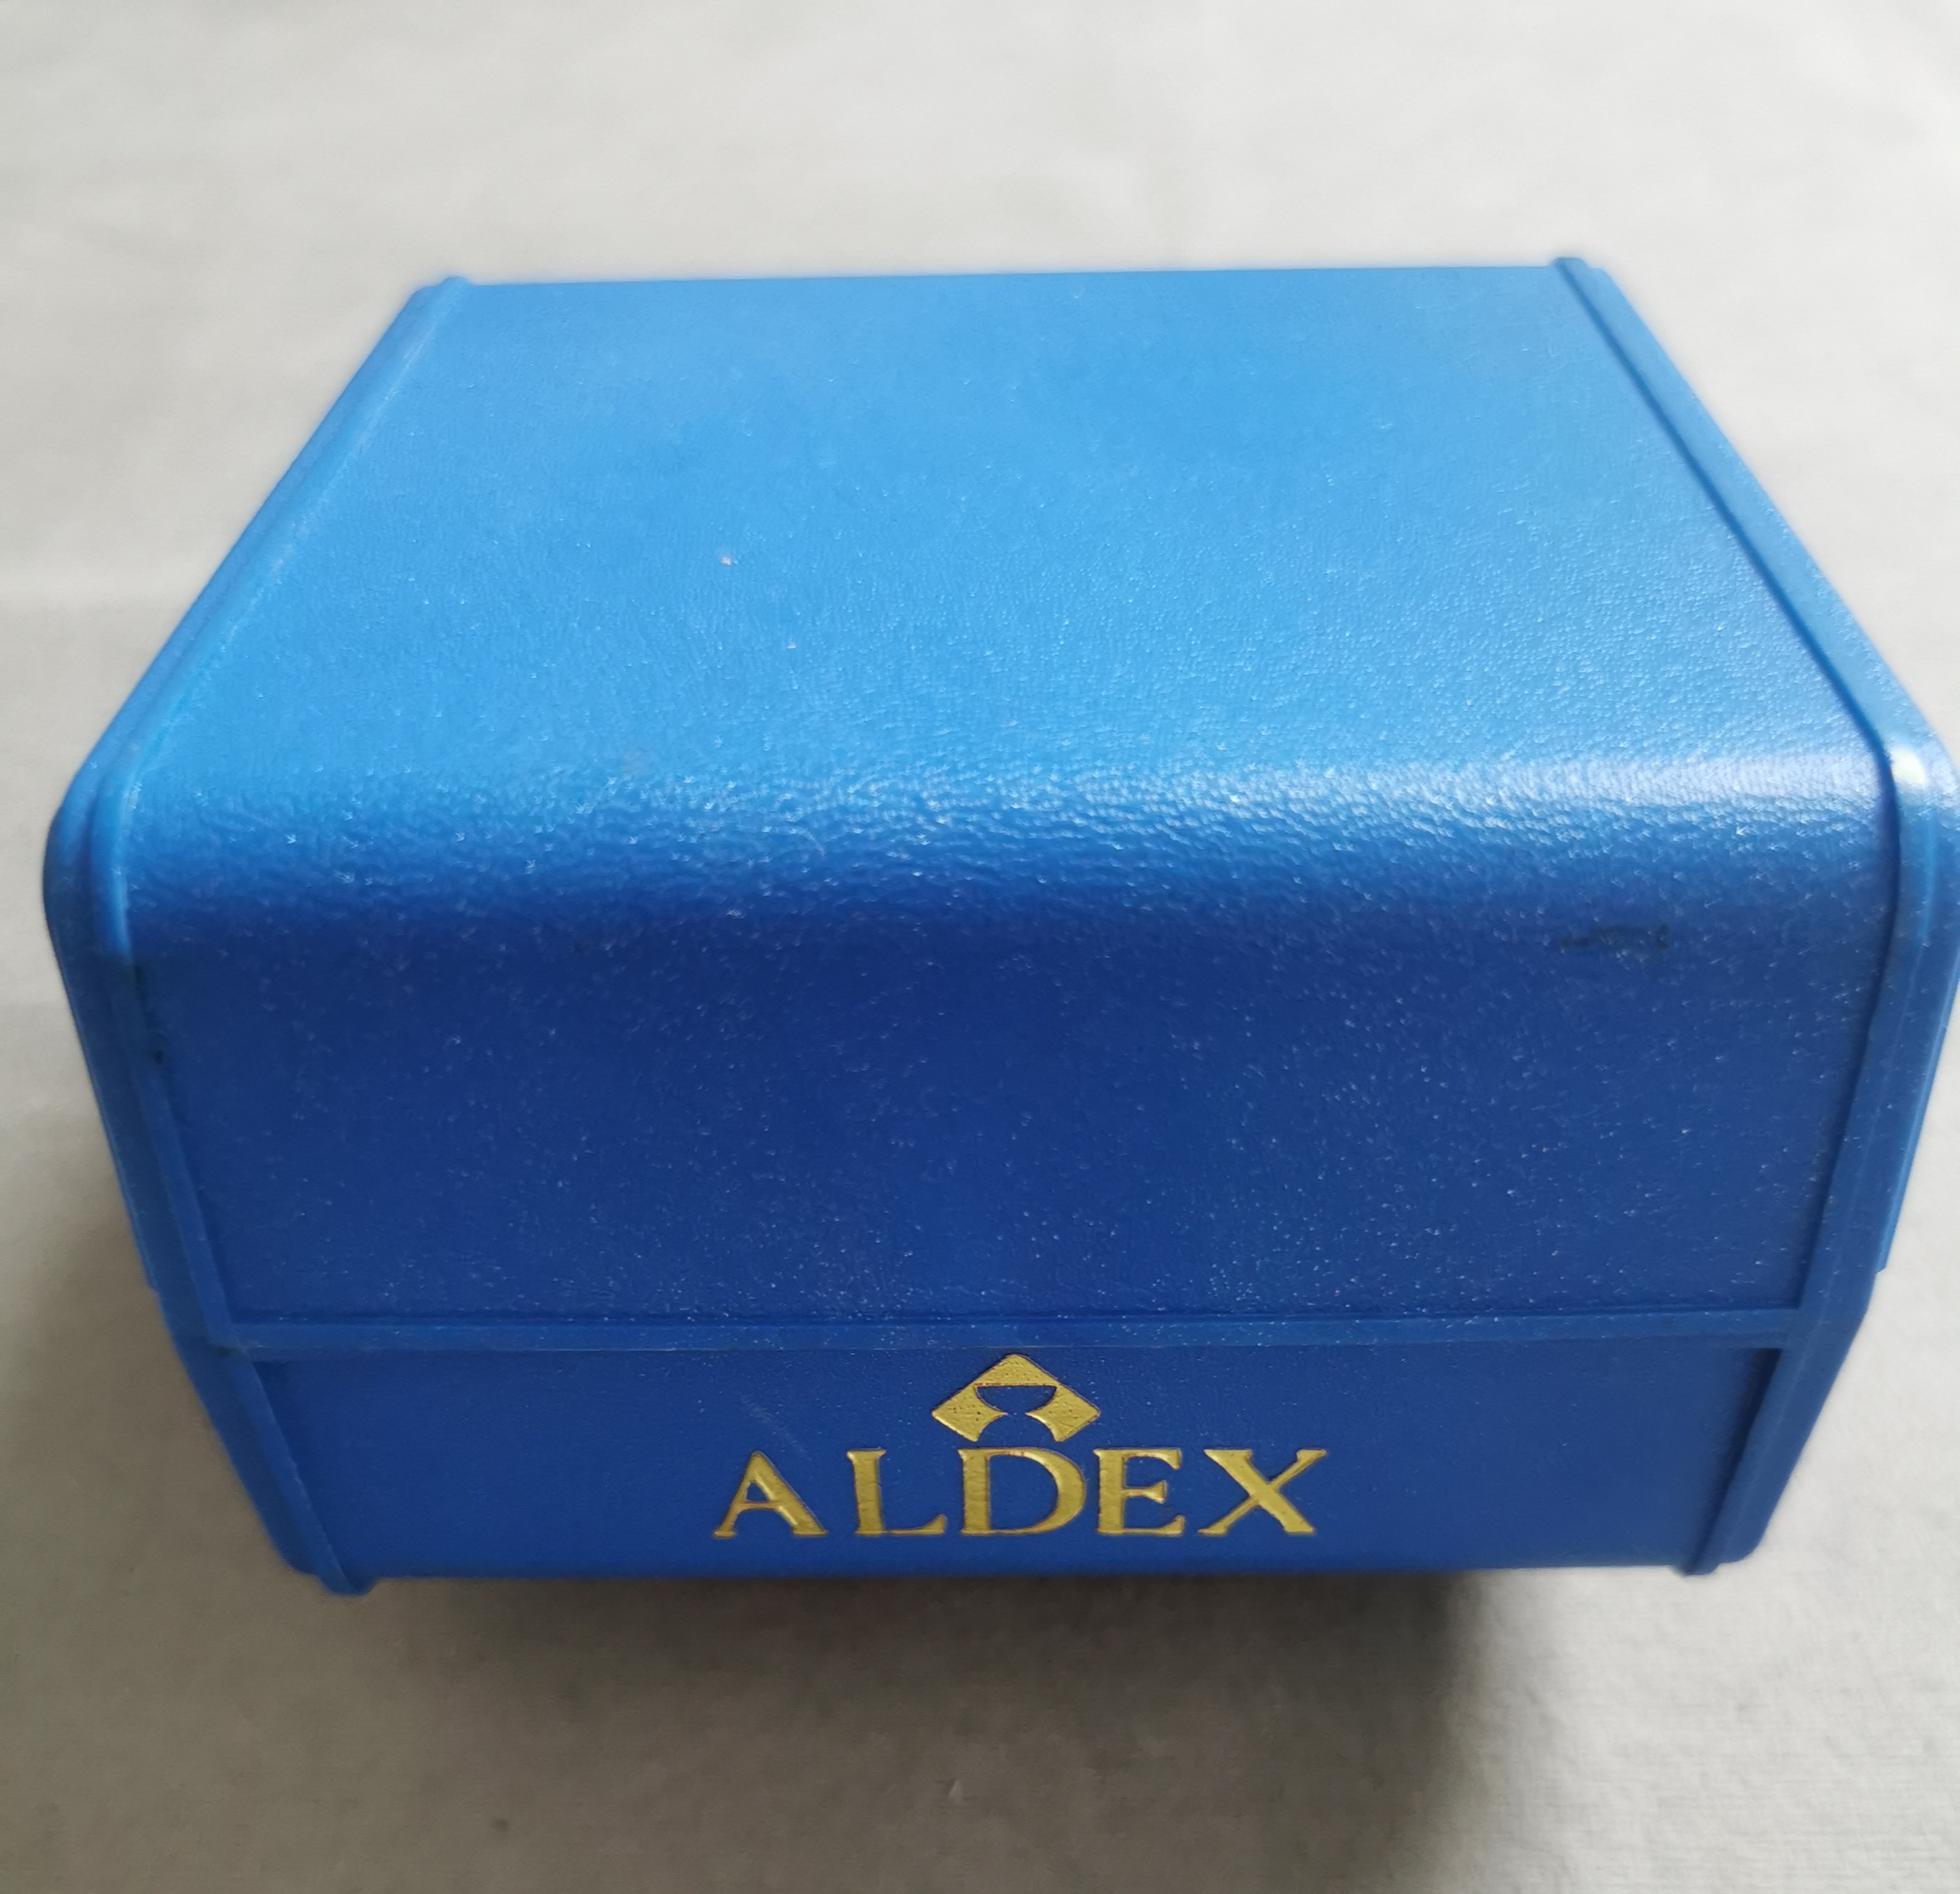 Anonimo Aldex vintage watch plastic box blu and grey for any models like new condition | San Giorgio a Cremano